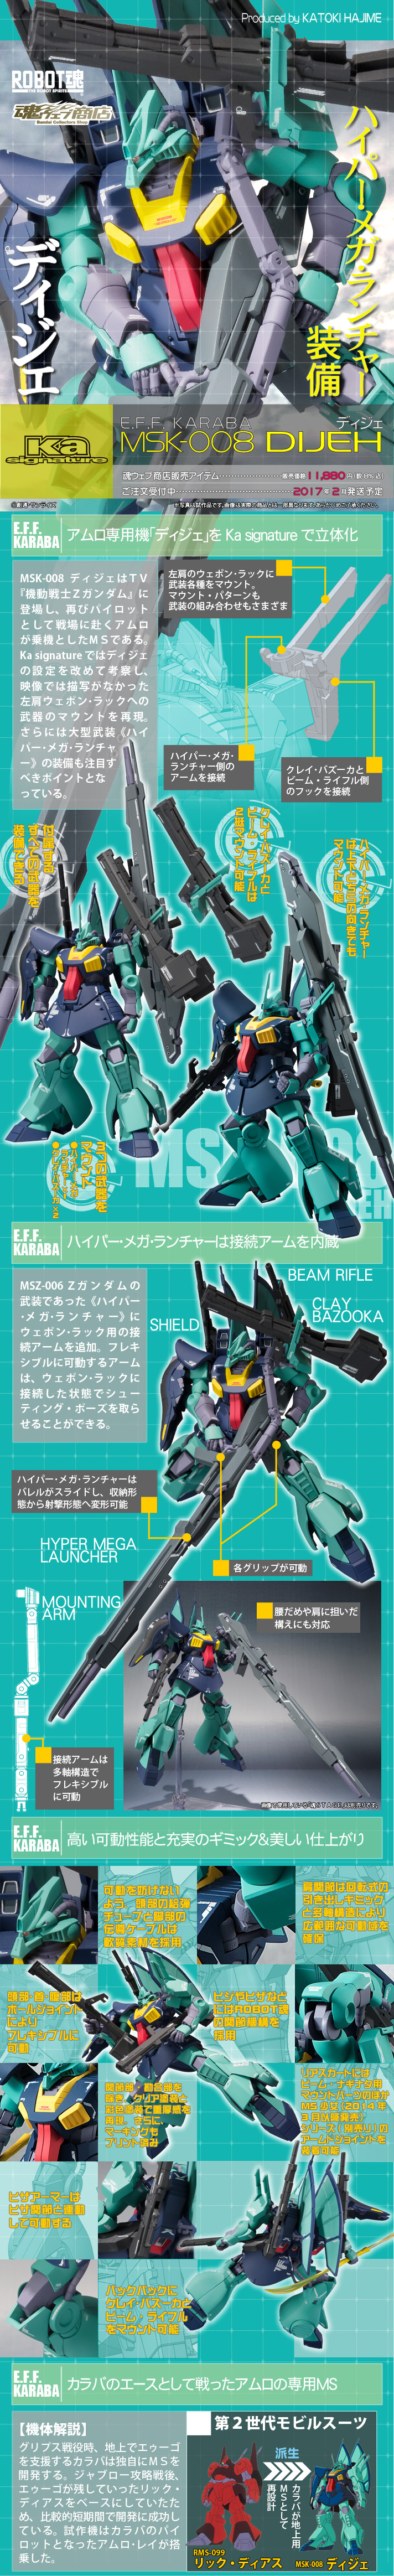 Robot Spirits[Ka Signature](Side MS) MSK-008 Dijeh(Mobile Suit Zeta Gundam)